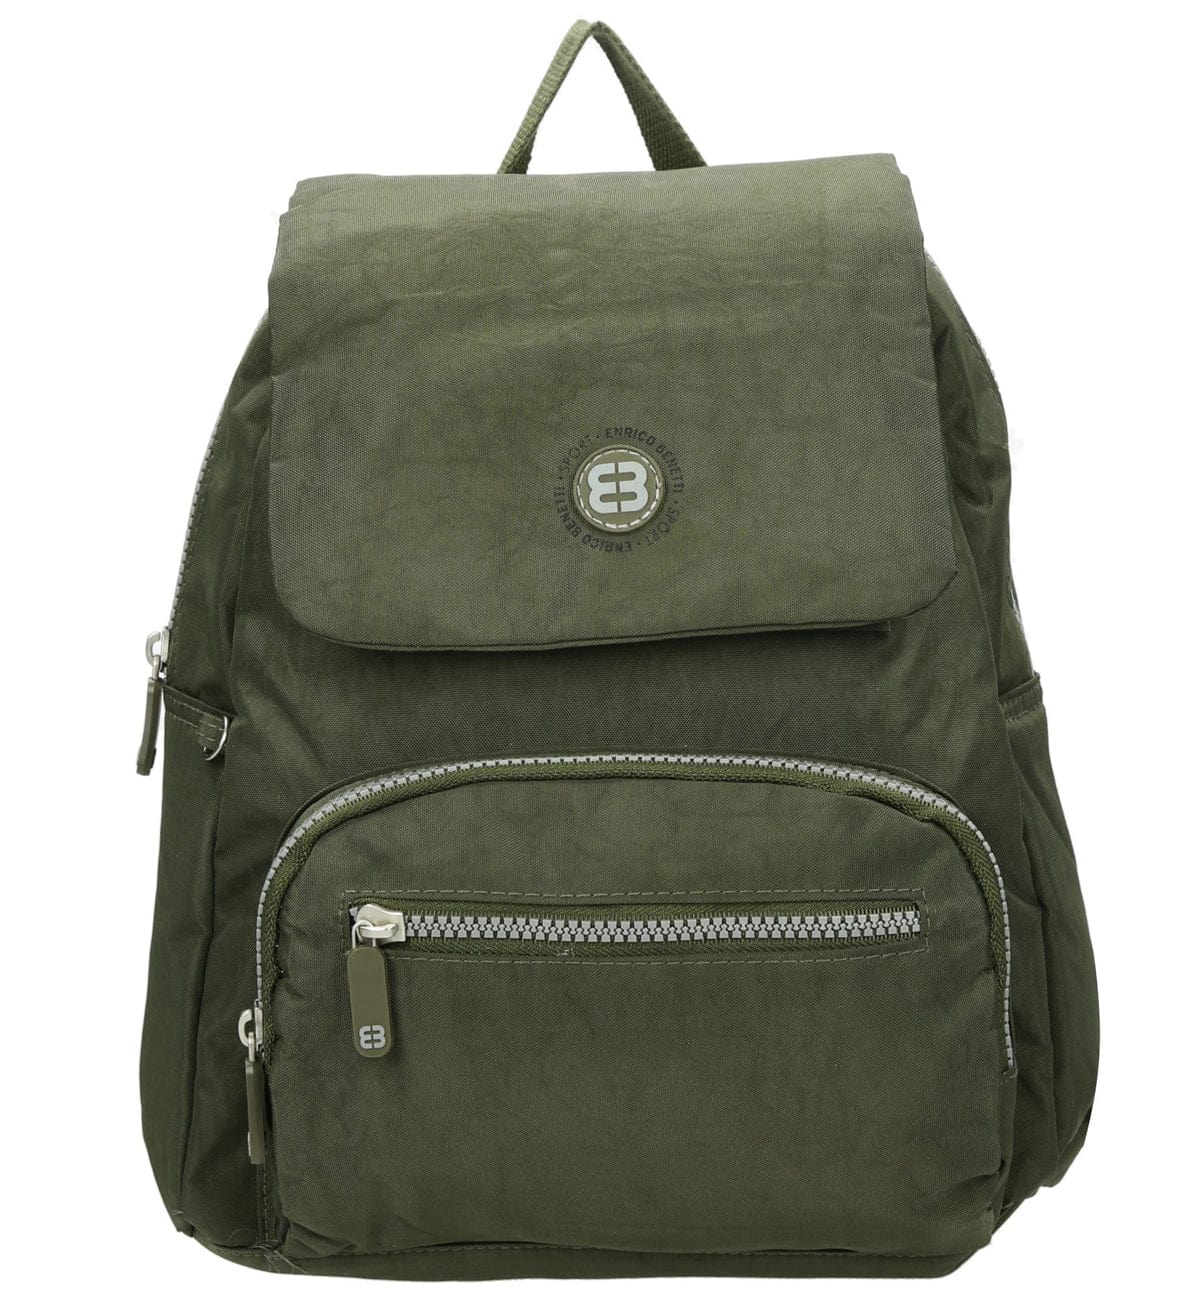 Wandel rugzak / City backpack lichtgewicht kleur Olive